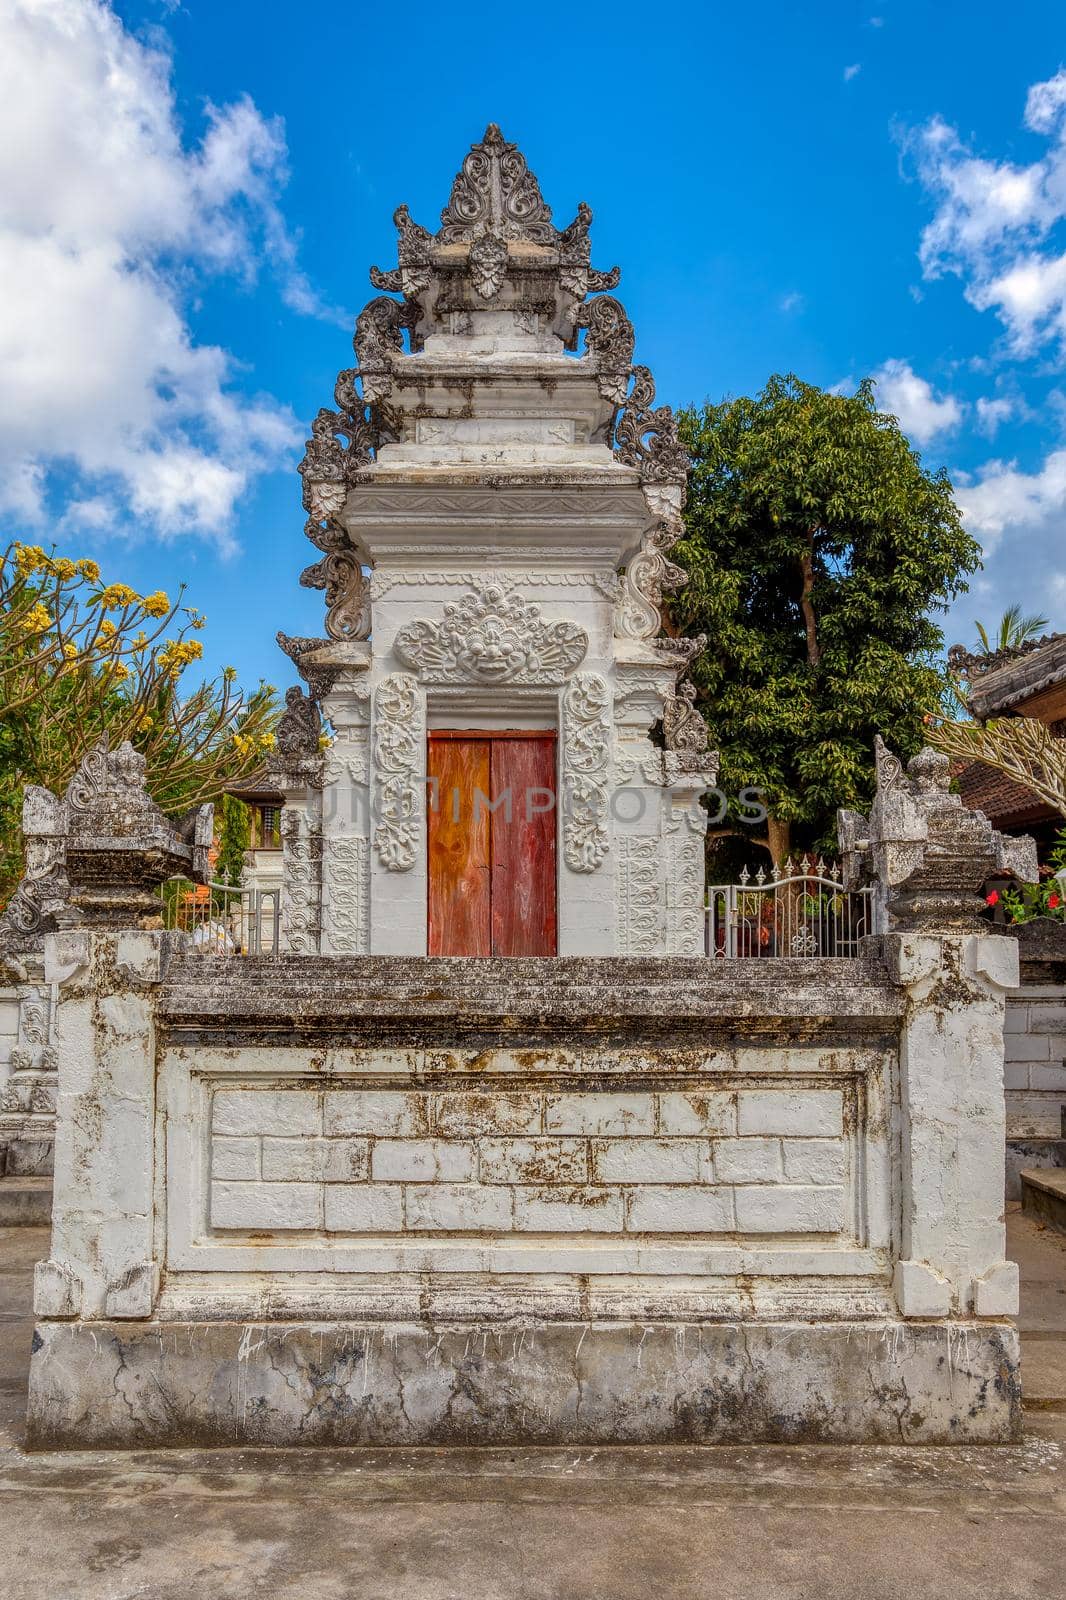 Small Hindu Temple, Nusa penida island, Bali Indonesia by artush